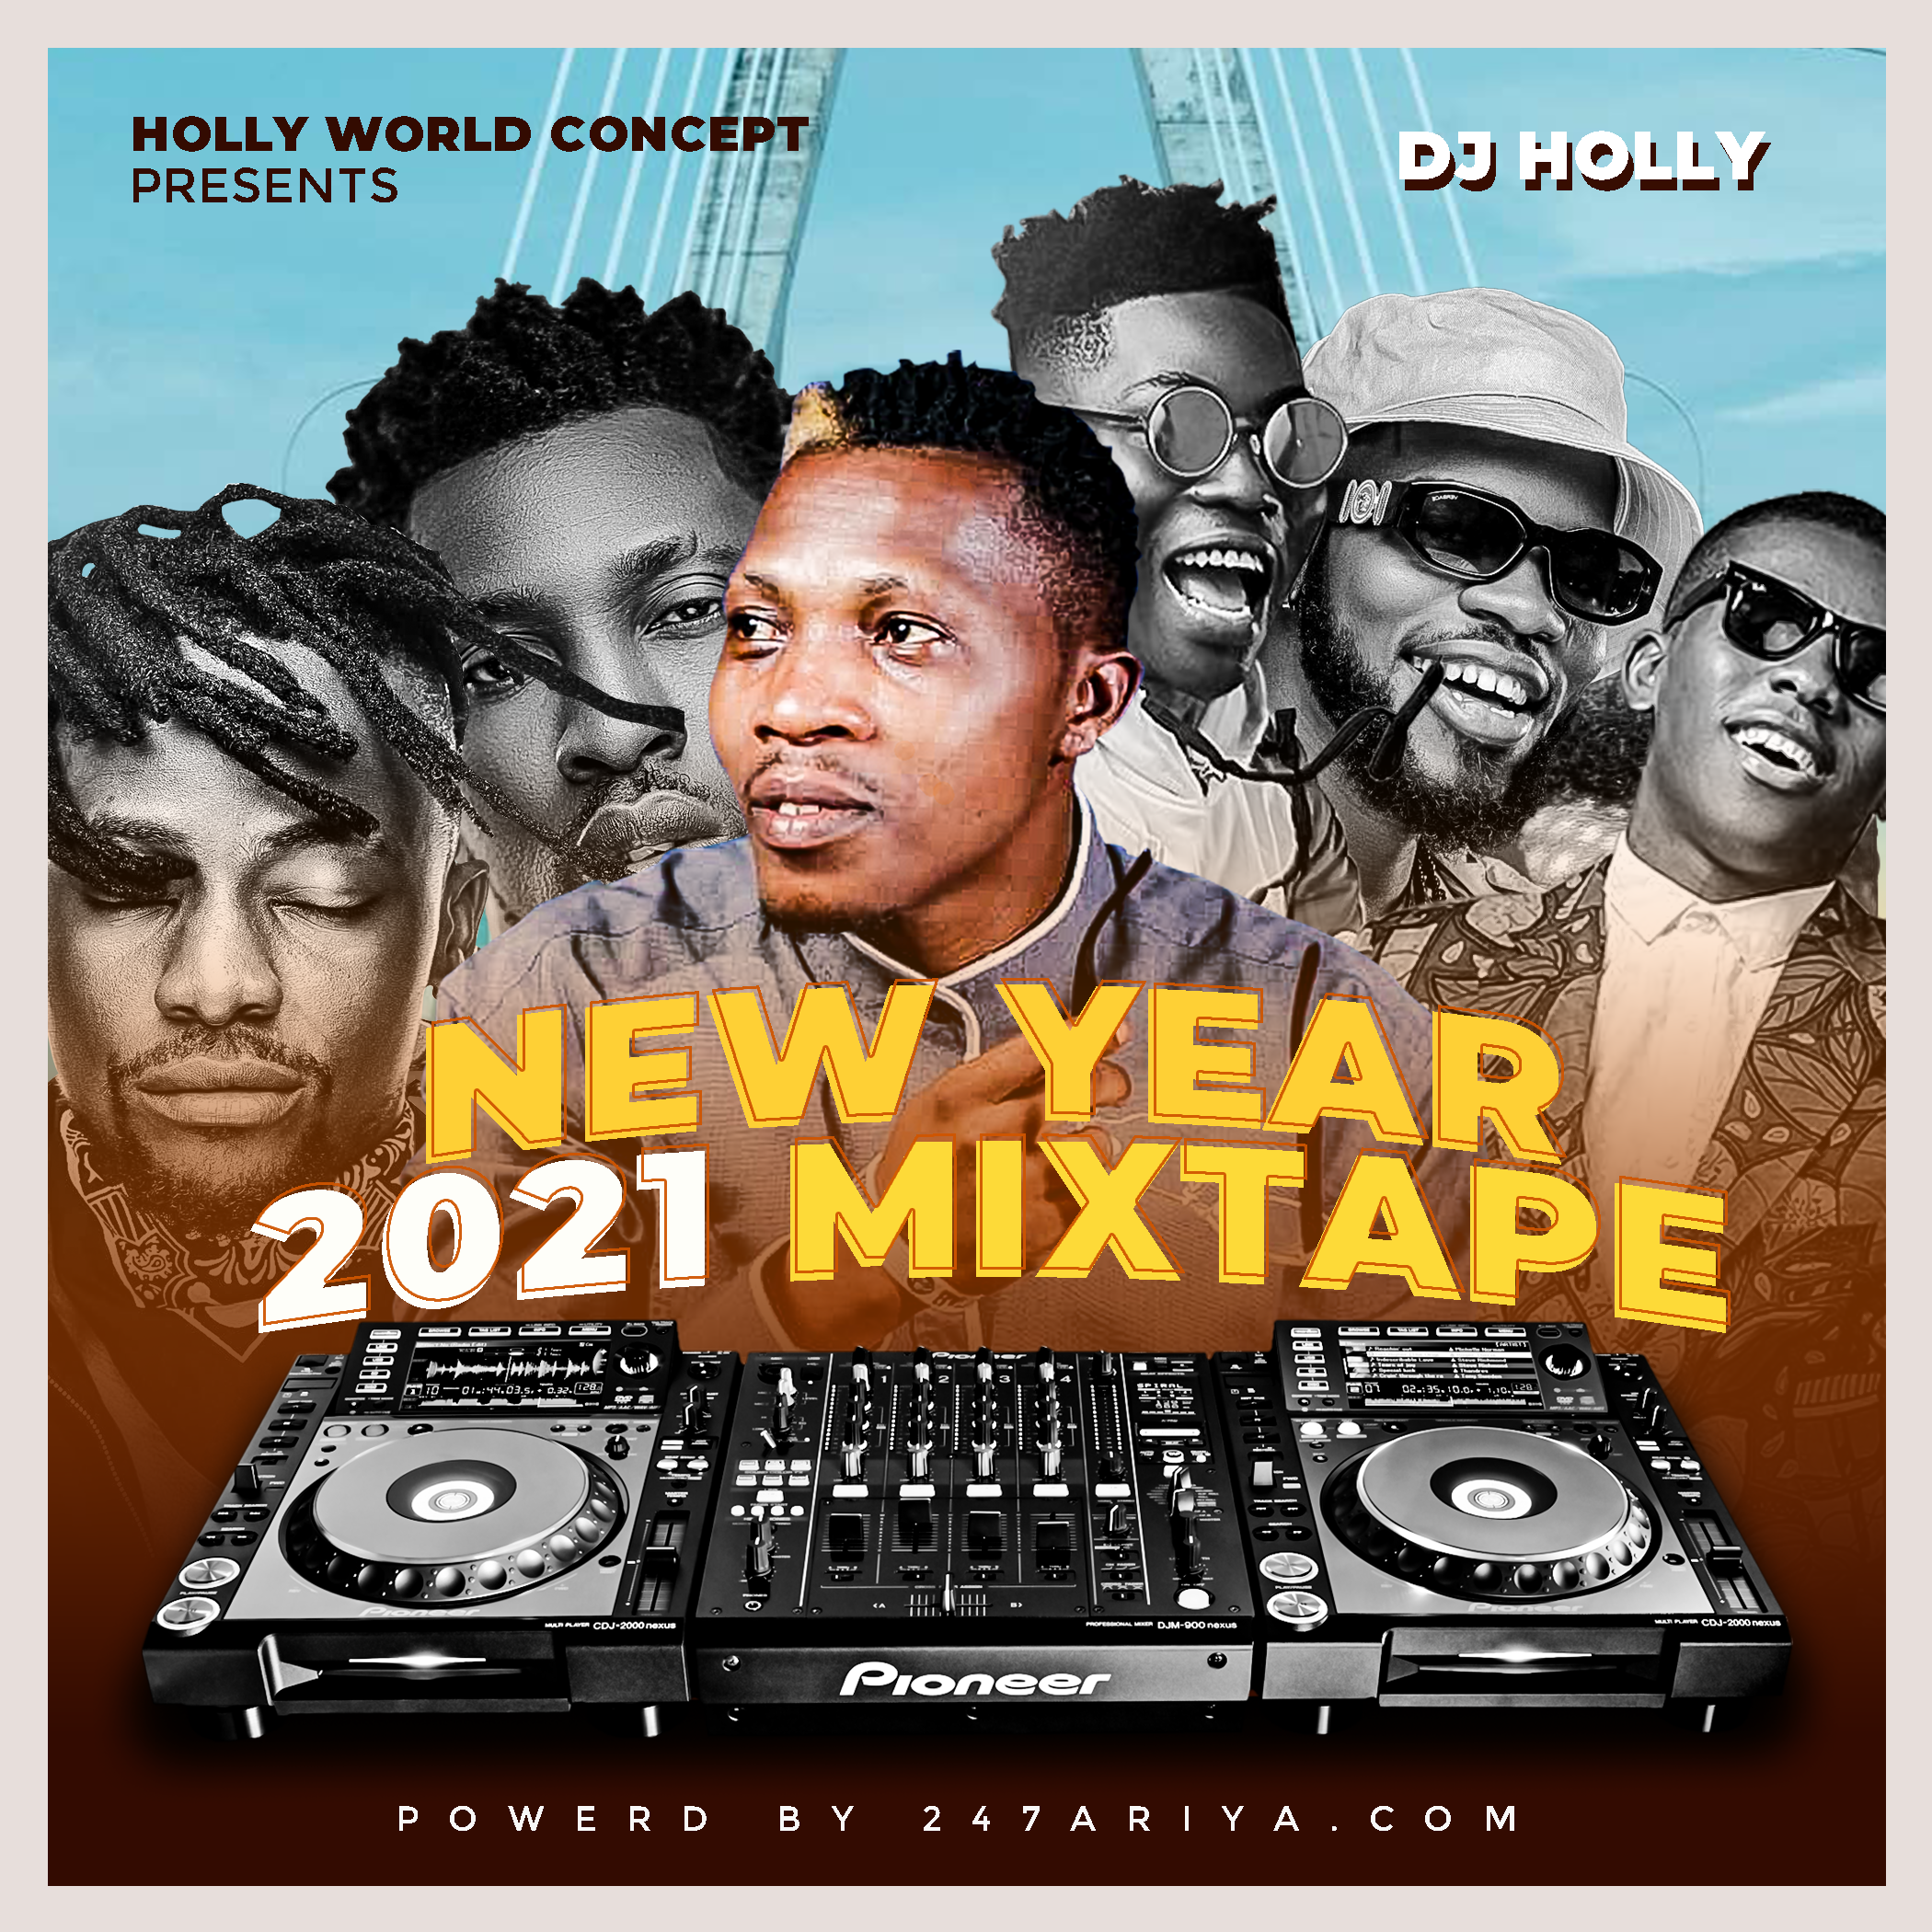 Download Mixtape: DJ Holly - New Year 2021 Mixtape